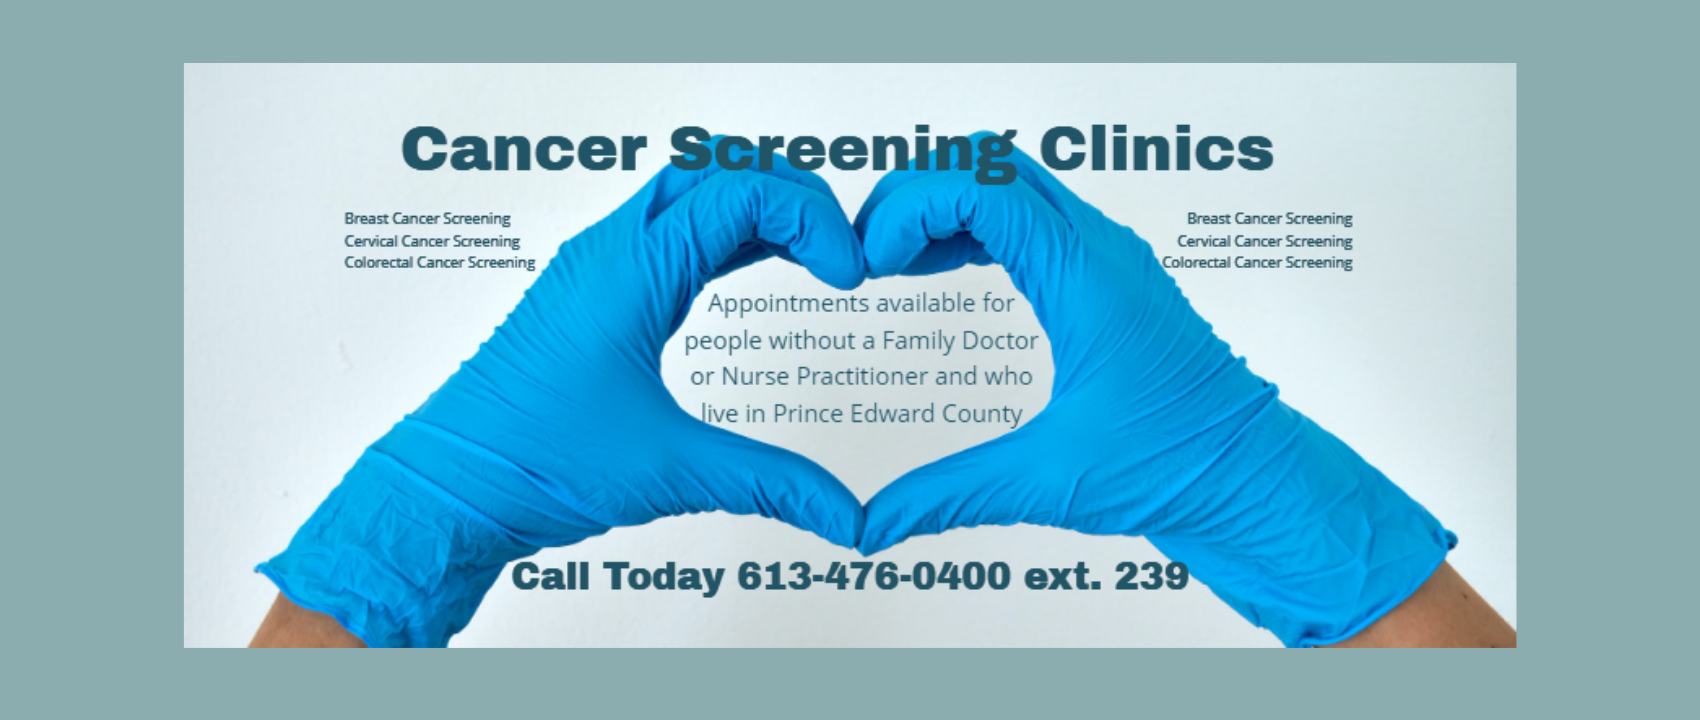 Cancer Screening Clinics